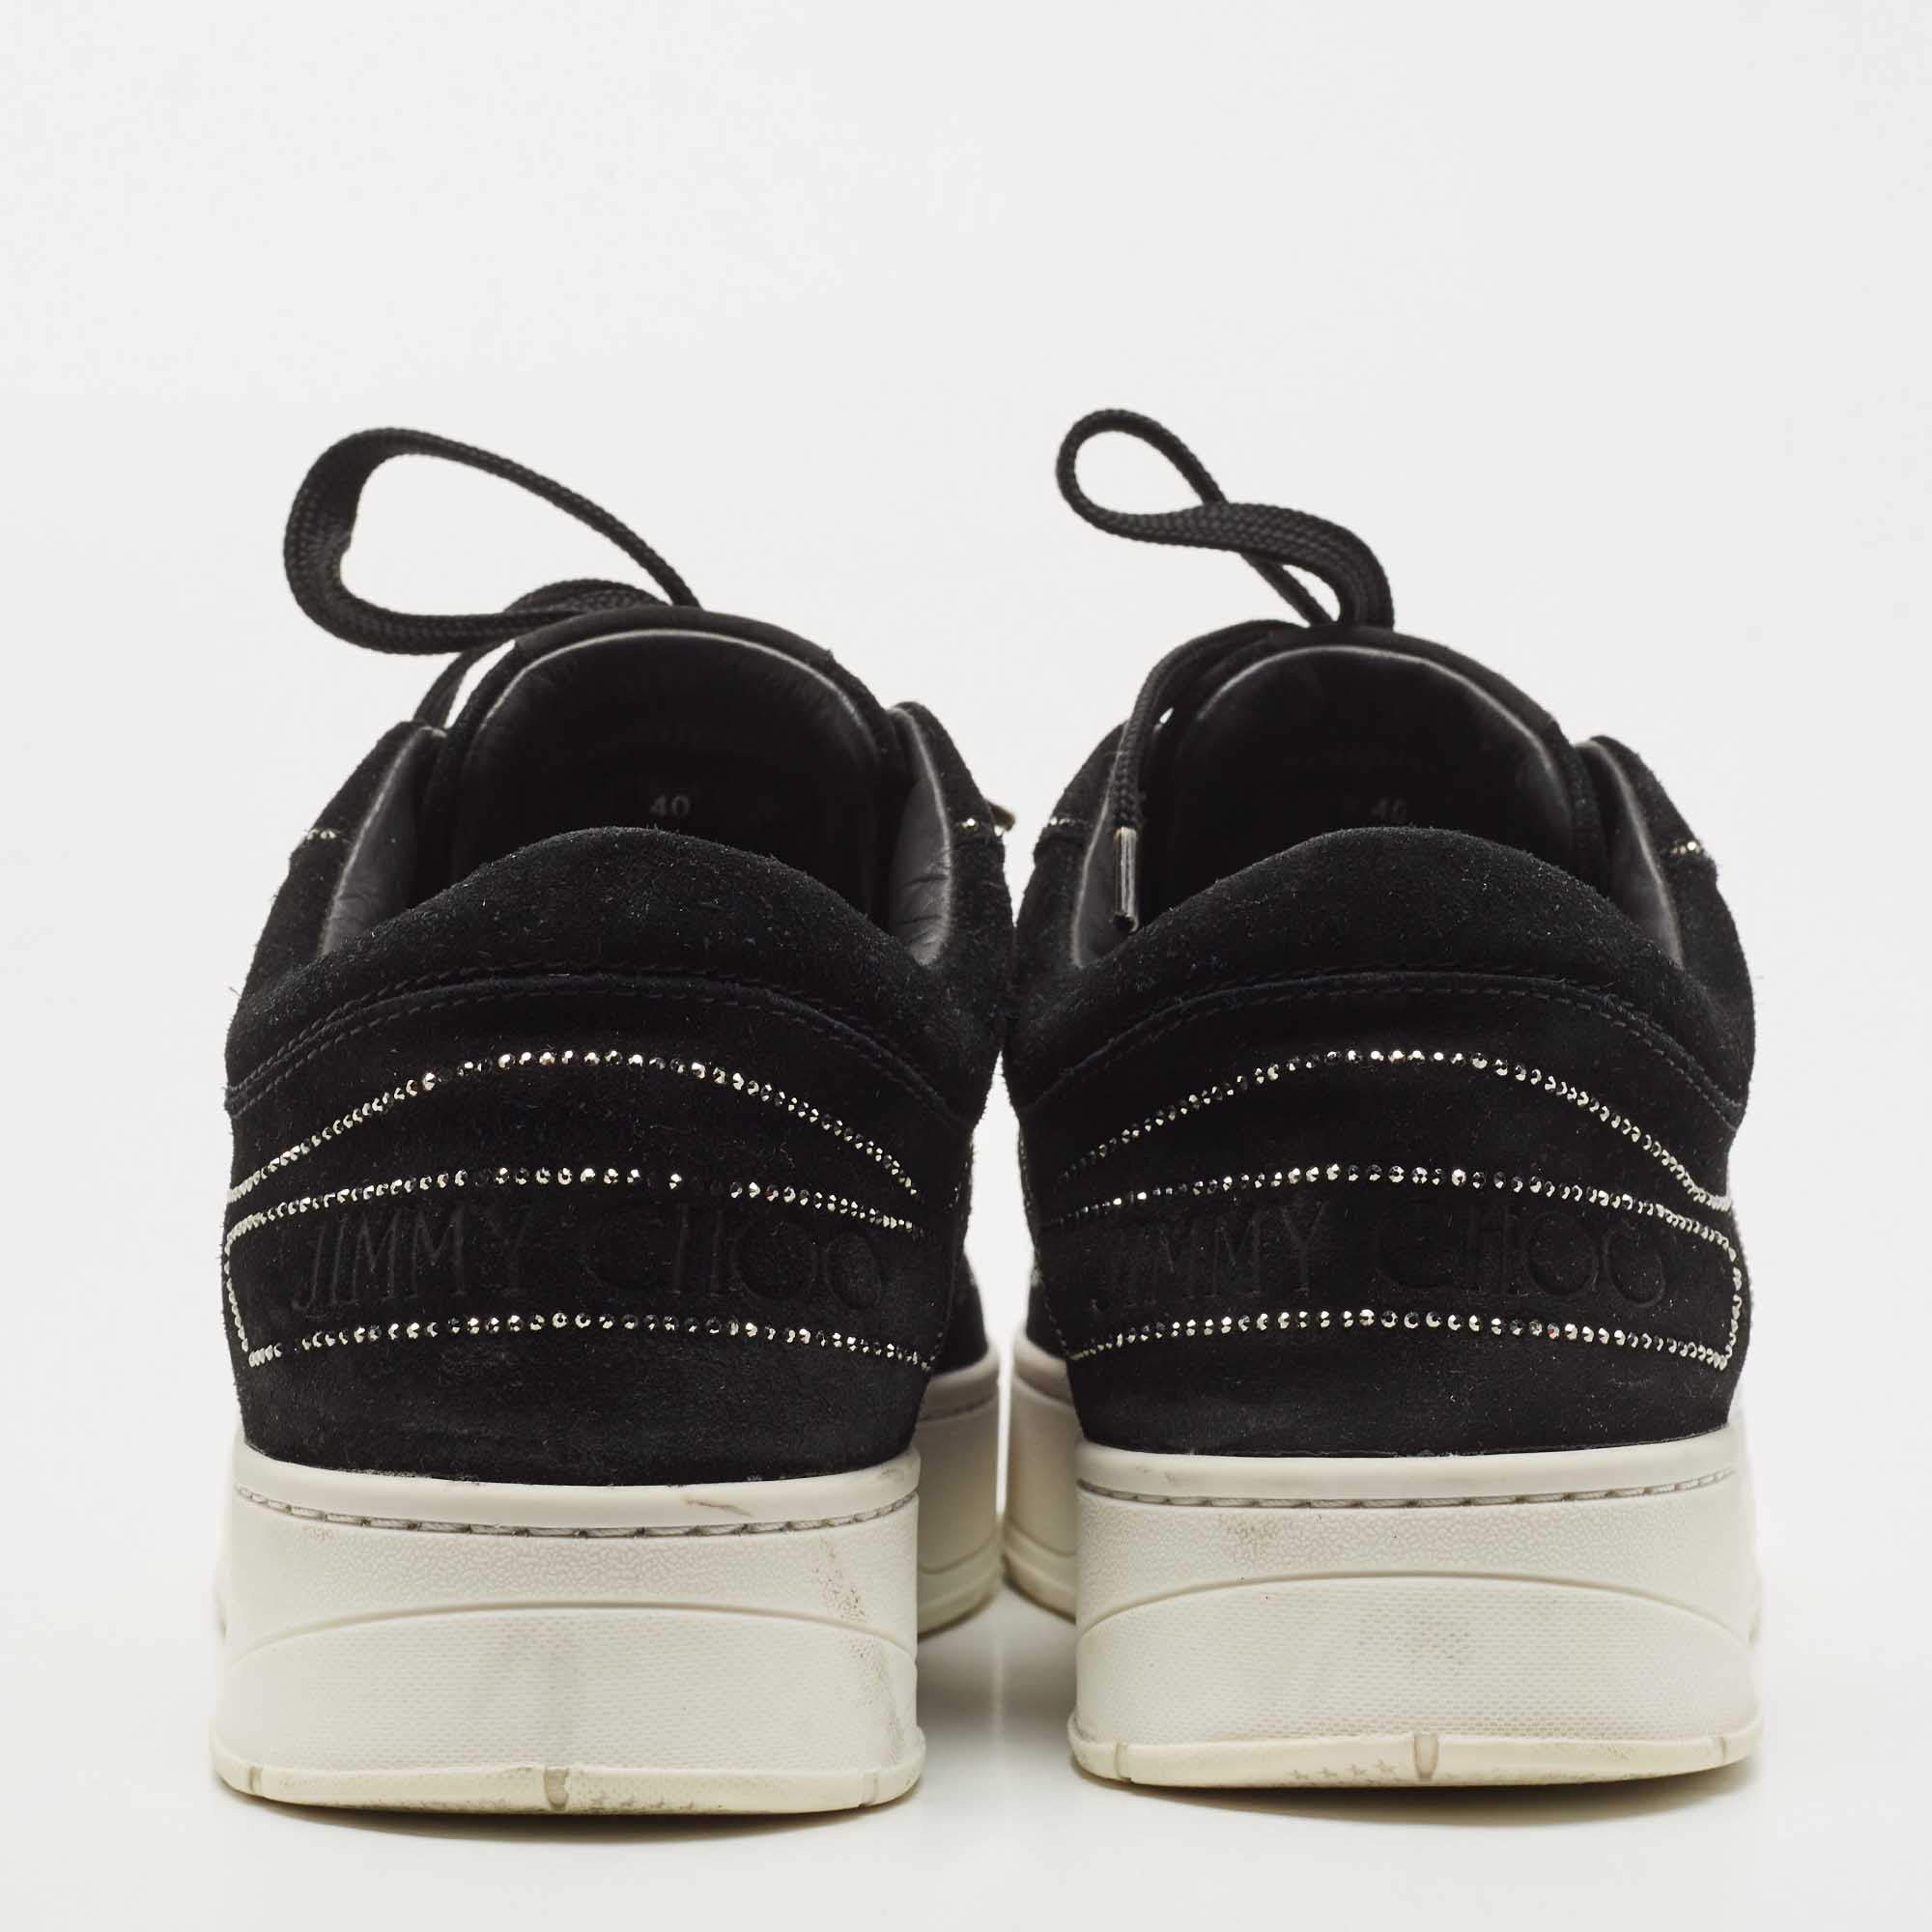 Jimmy Choo Black Suede Embellished Low Top  Sneakers Size 40